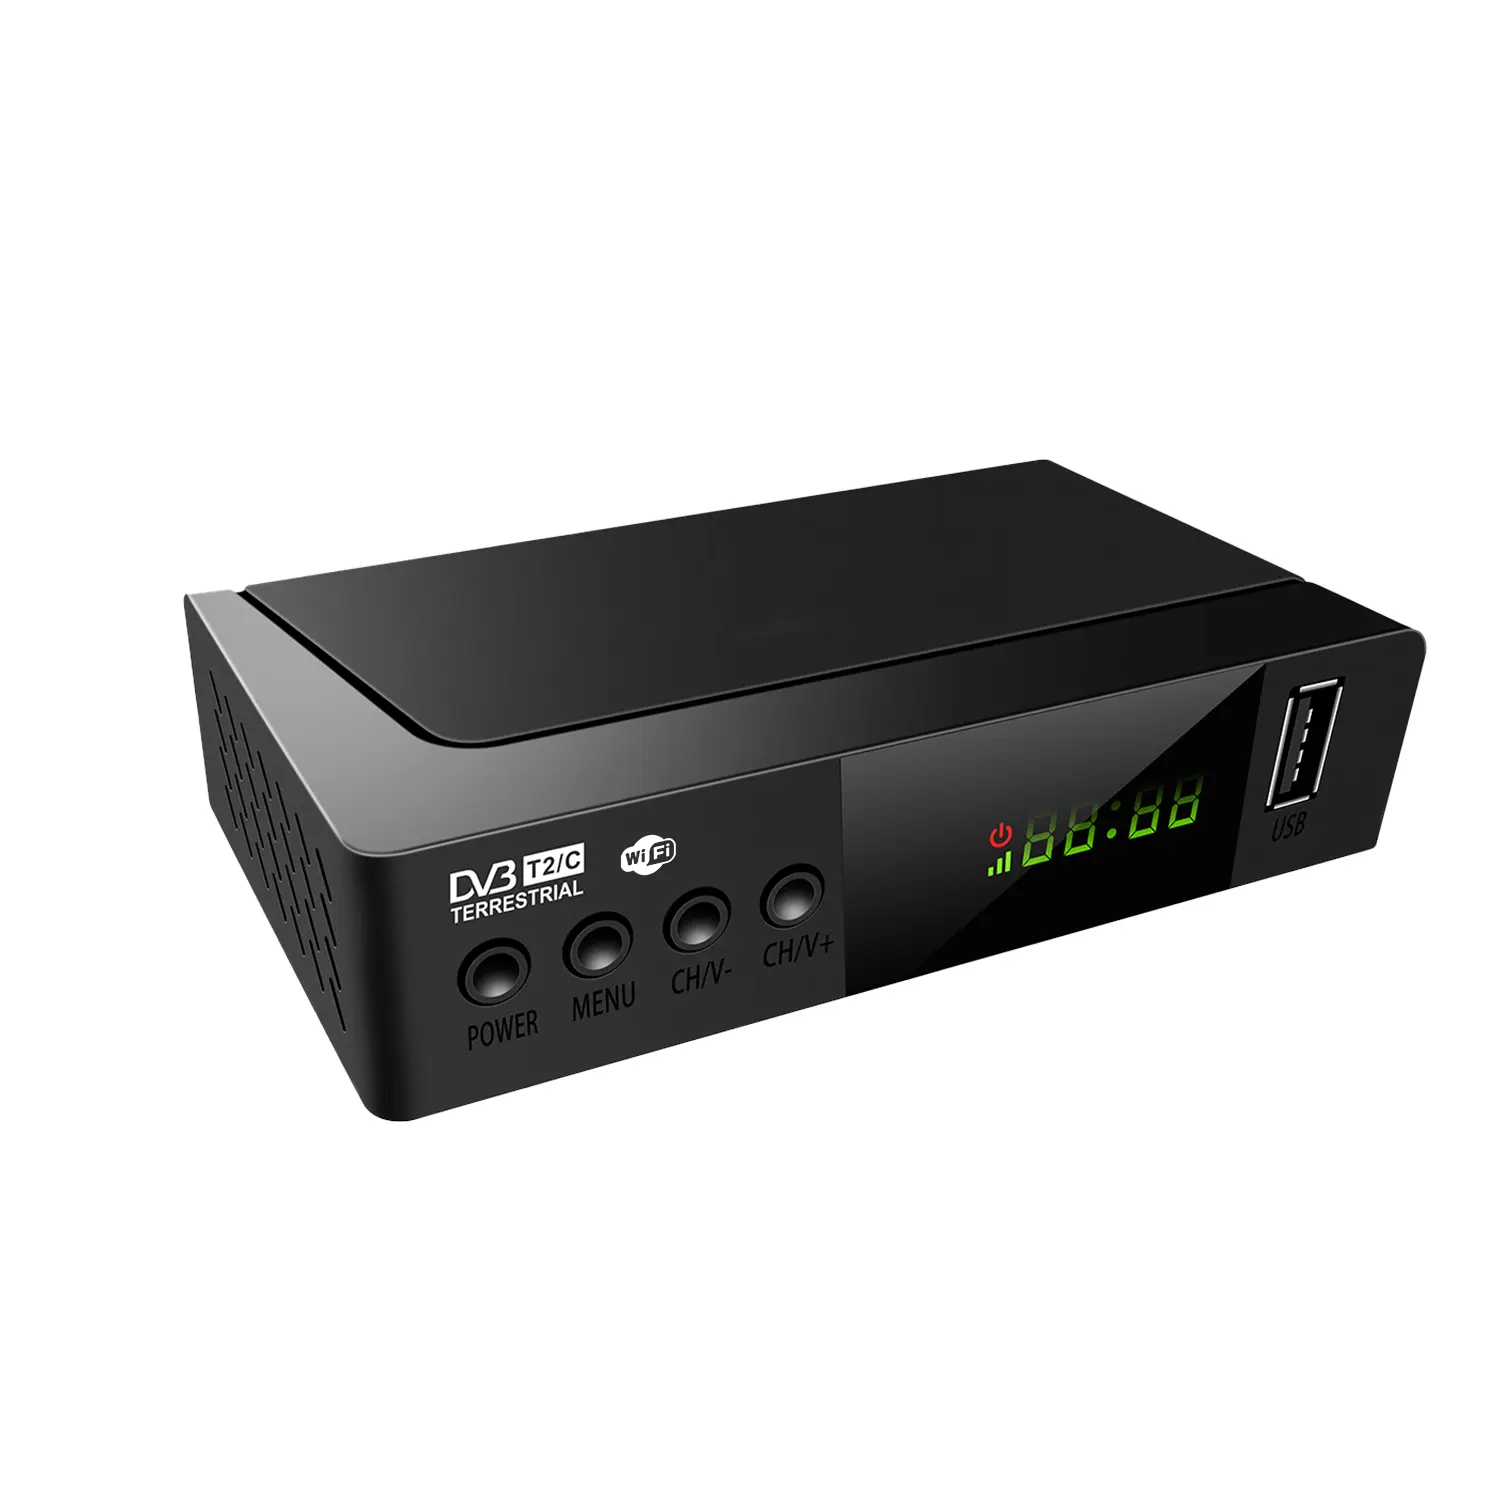 Tv Box Suppliers Network Set-top Box Full HD Digital Tv Receiver H.264 MPEG4/Hevc H.265 DVB-T2 Receiver